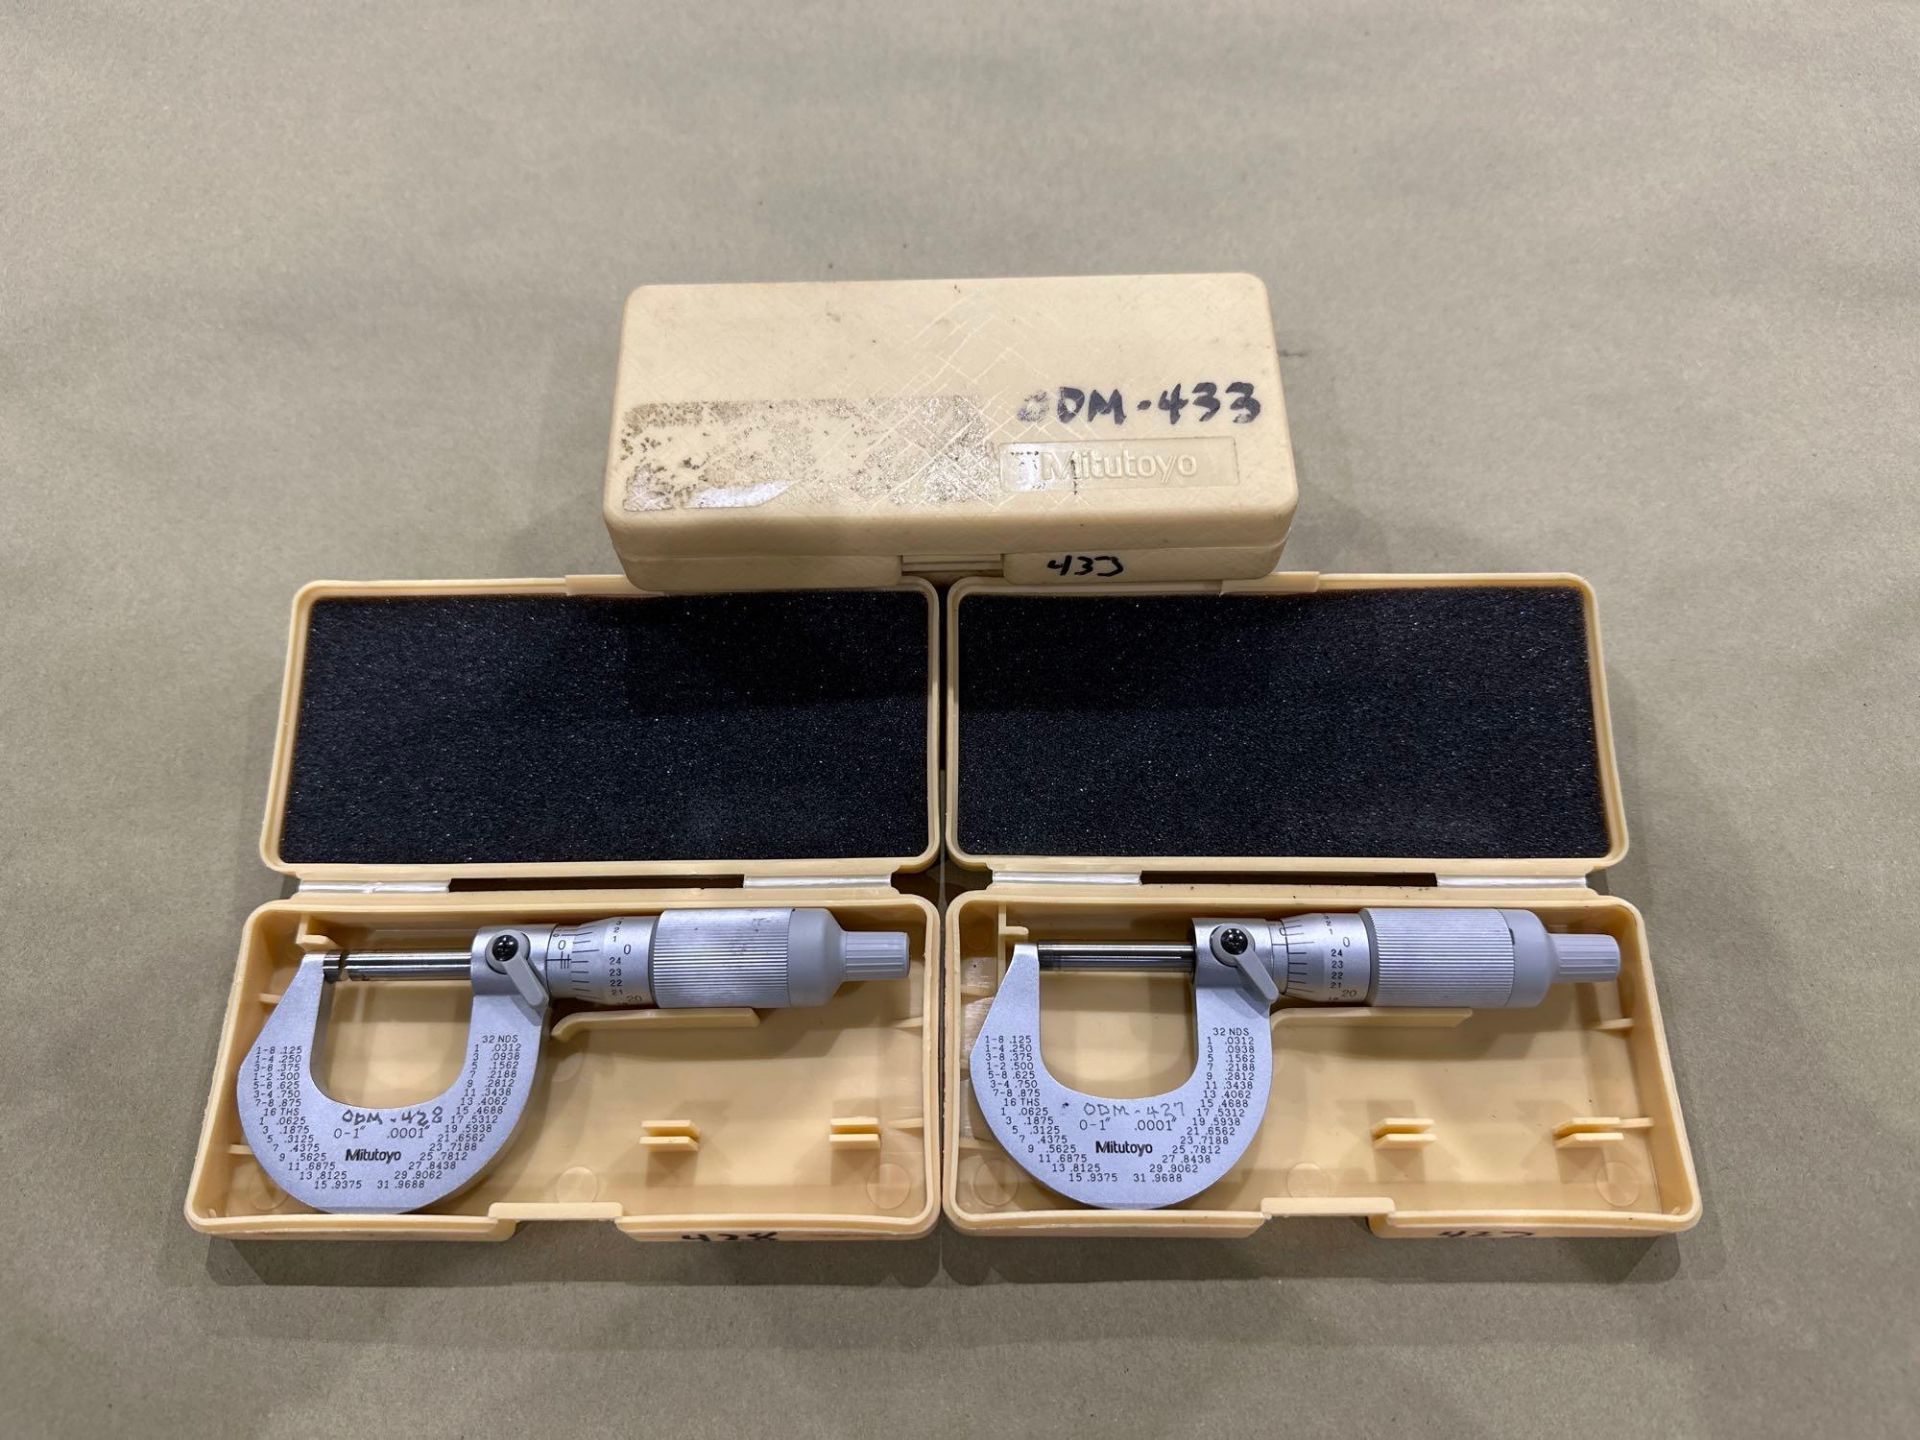 Lot of 4: Mitutoyo Mechanical OD Micrometer M227-1”, 0-1” Range, .0001” Graduation, in plastic box - Image 6 of 6